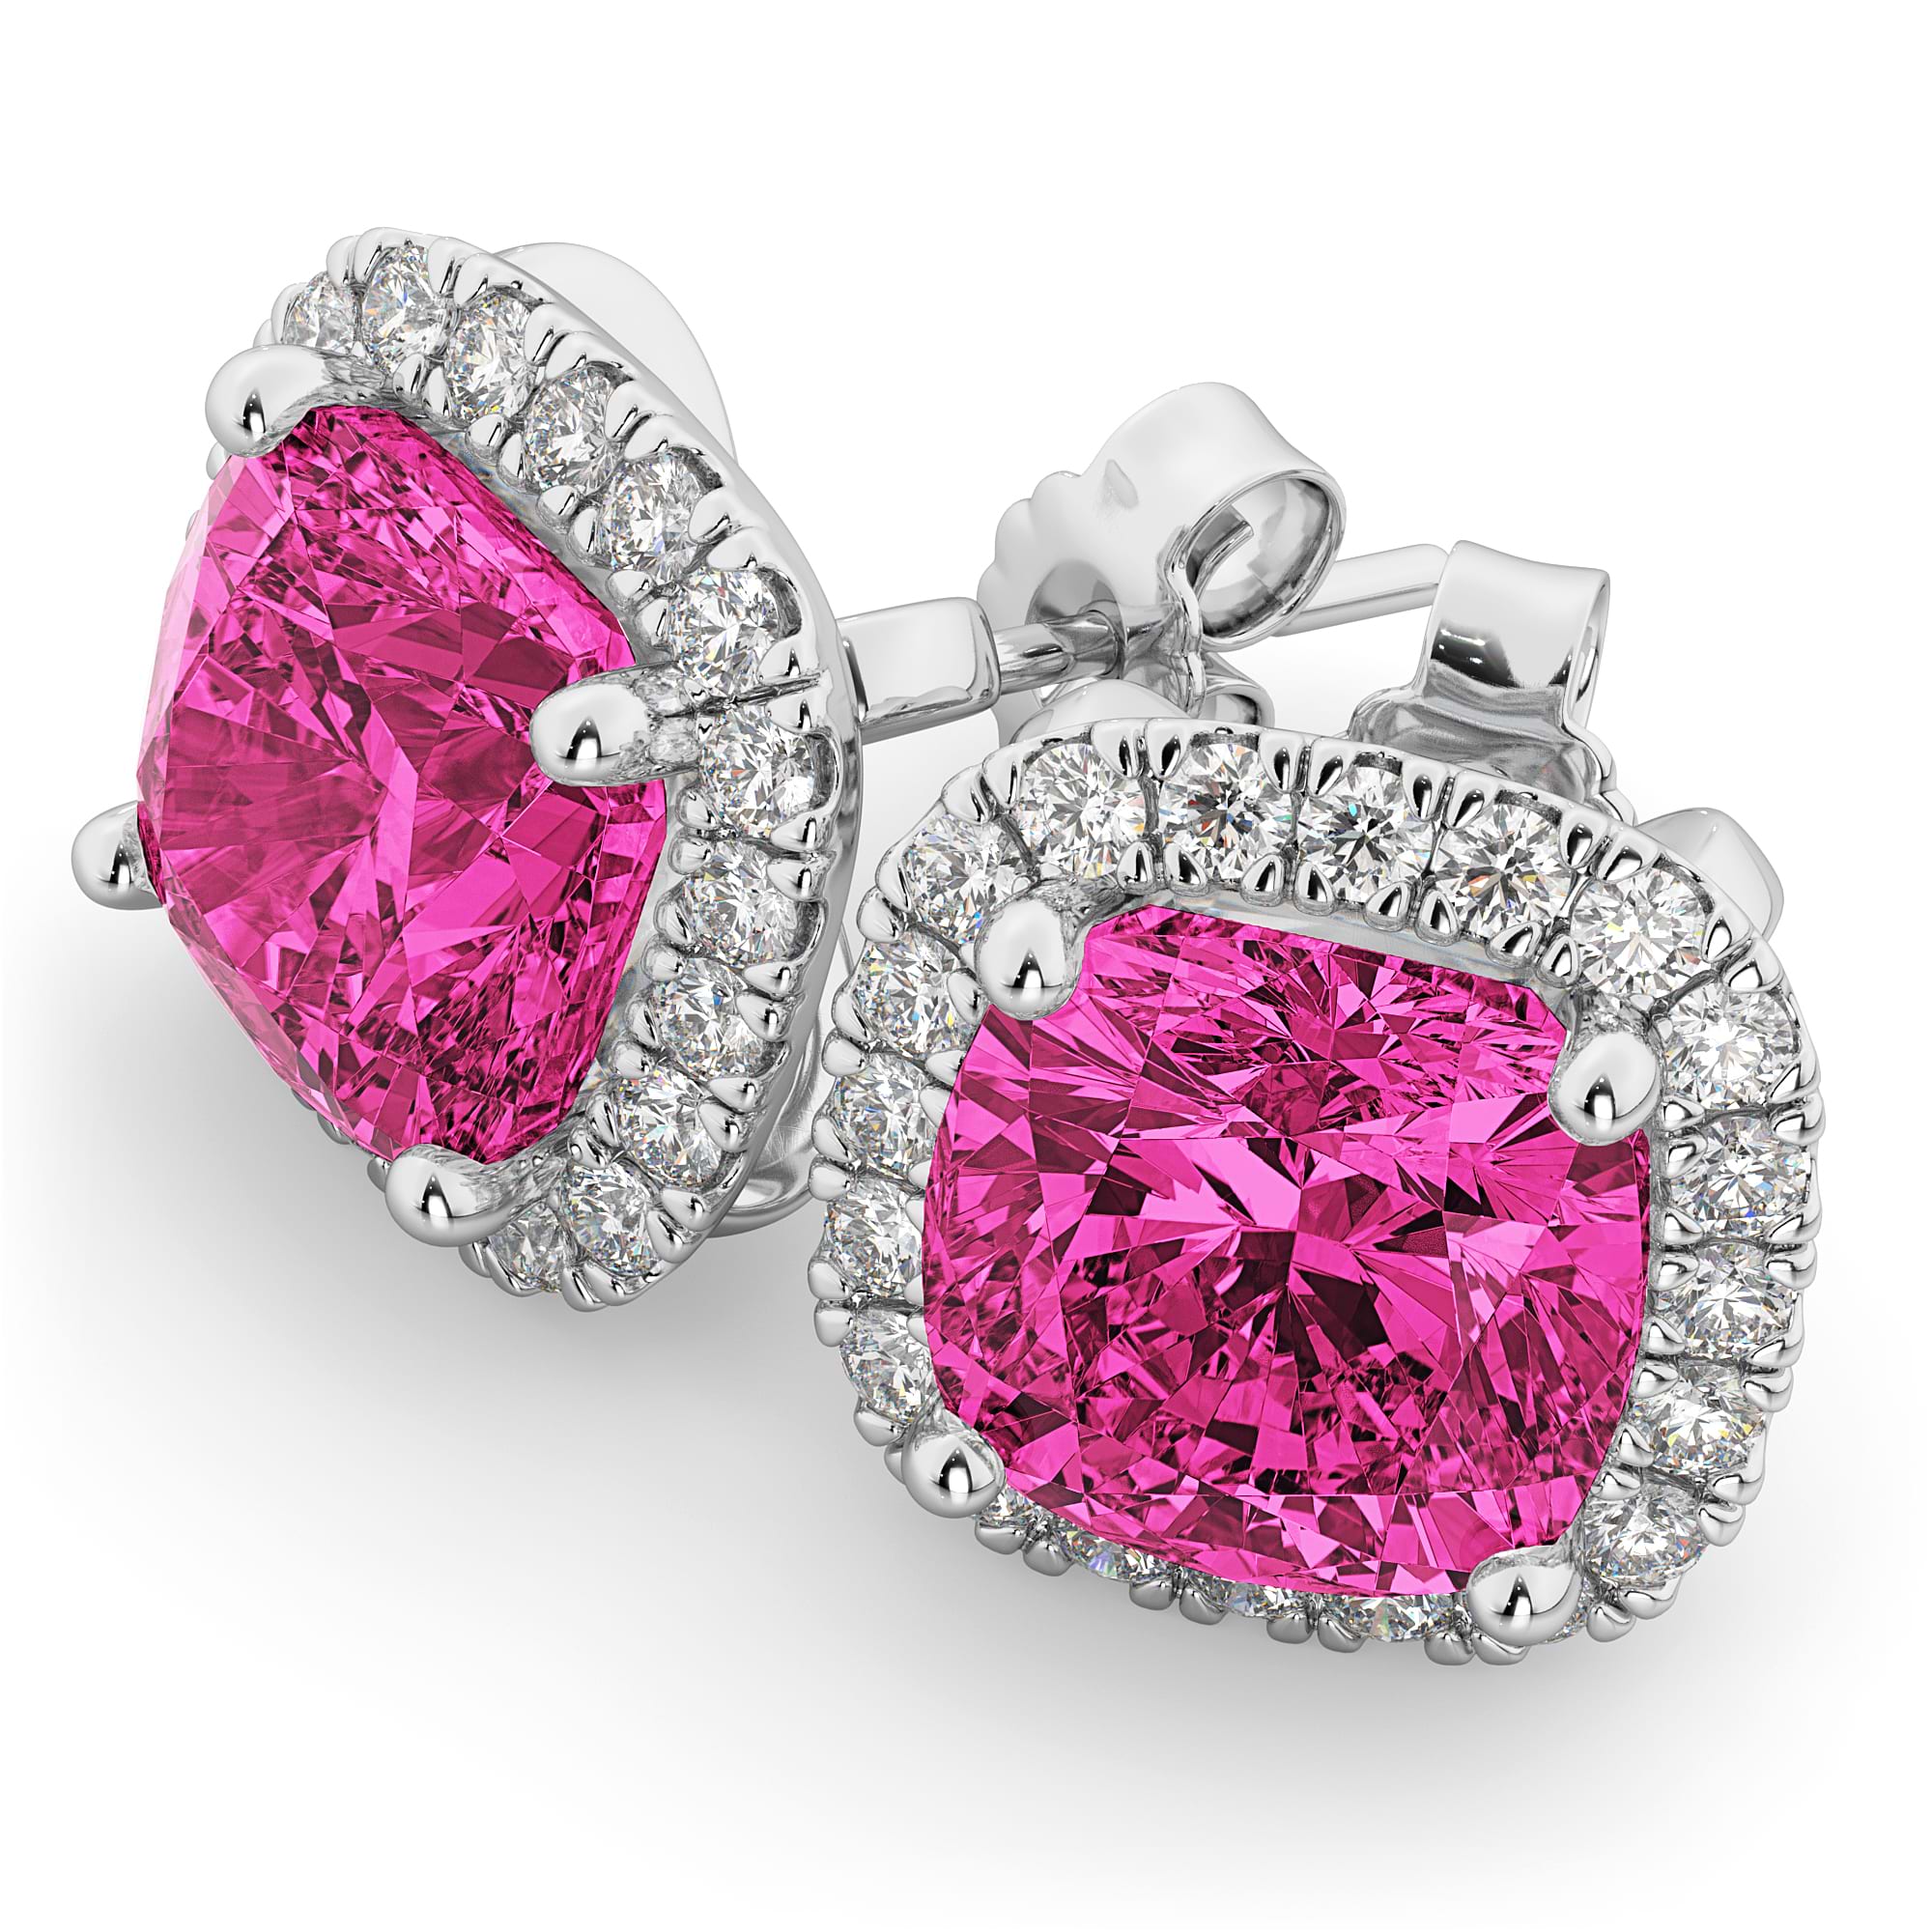 Halo Cushion Pink Tourmaline & Diamond Earrings 14k White Gold (4.04ct)